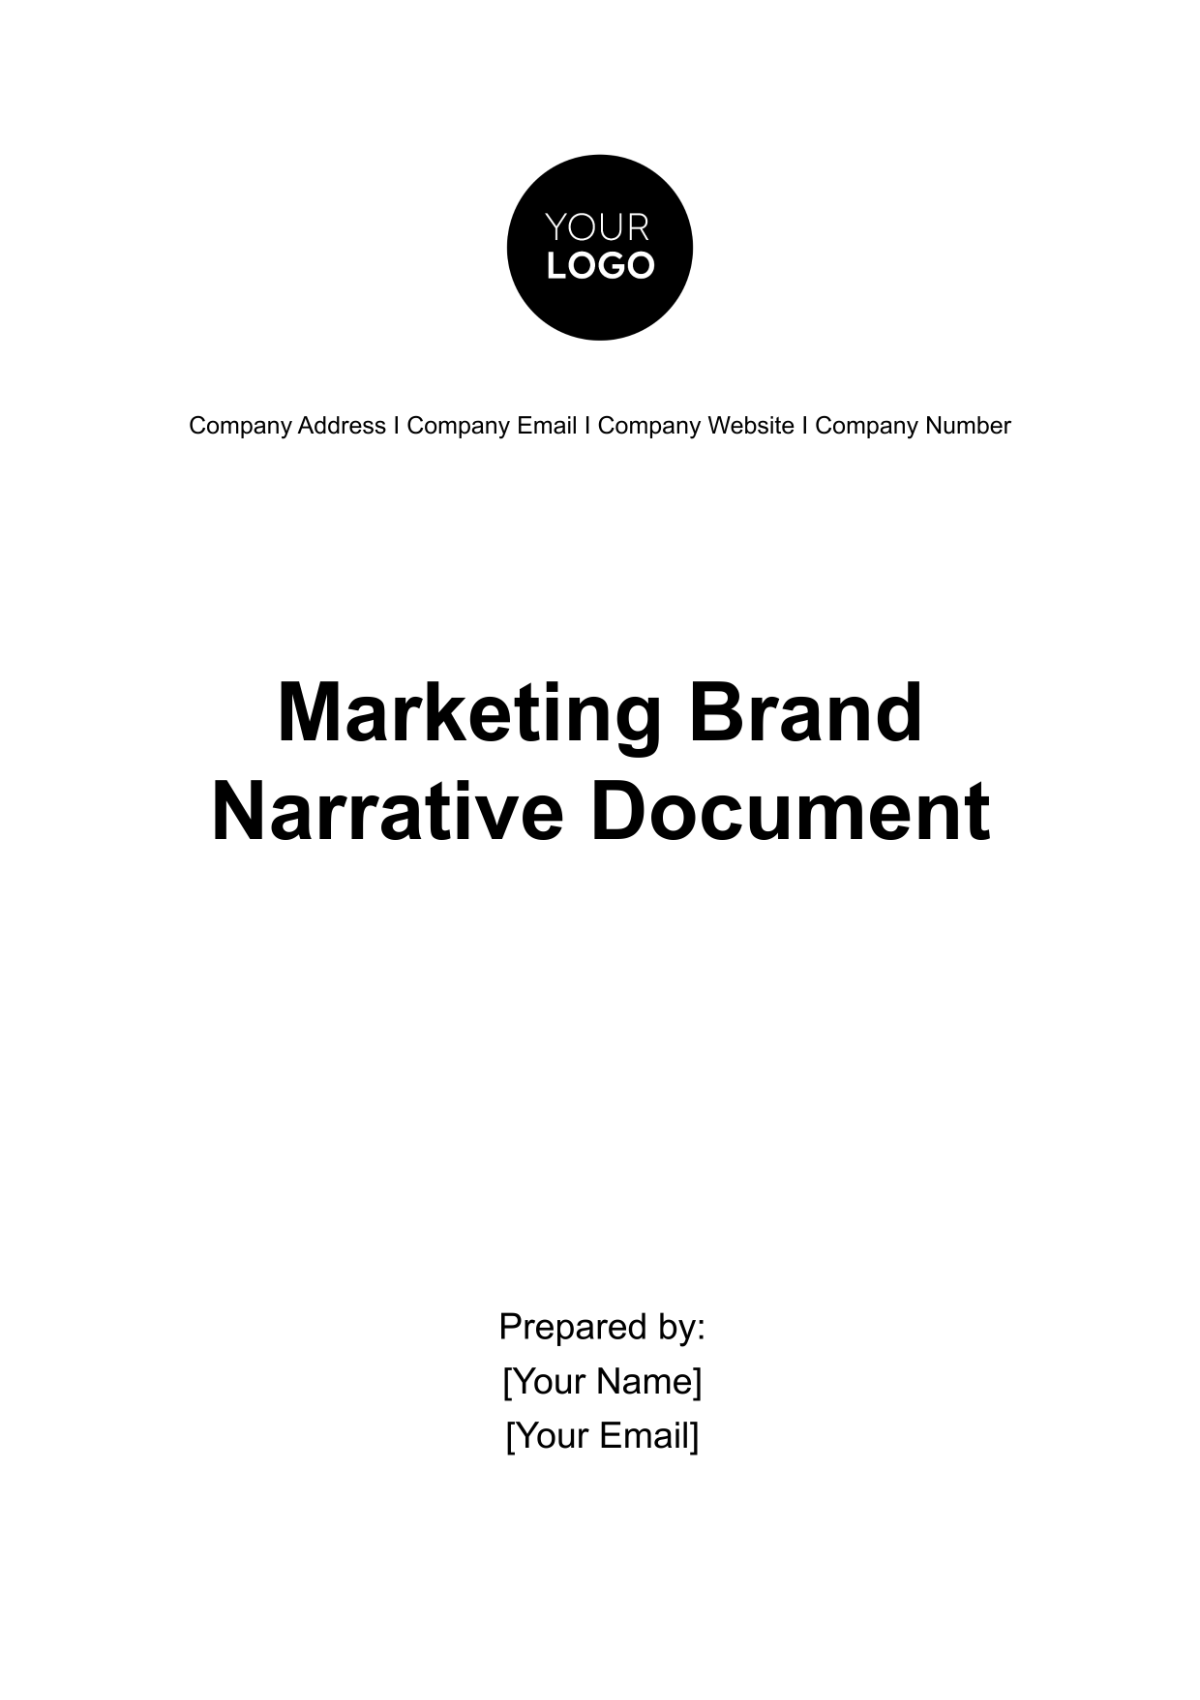 Marketing Brand Narrative Document Template